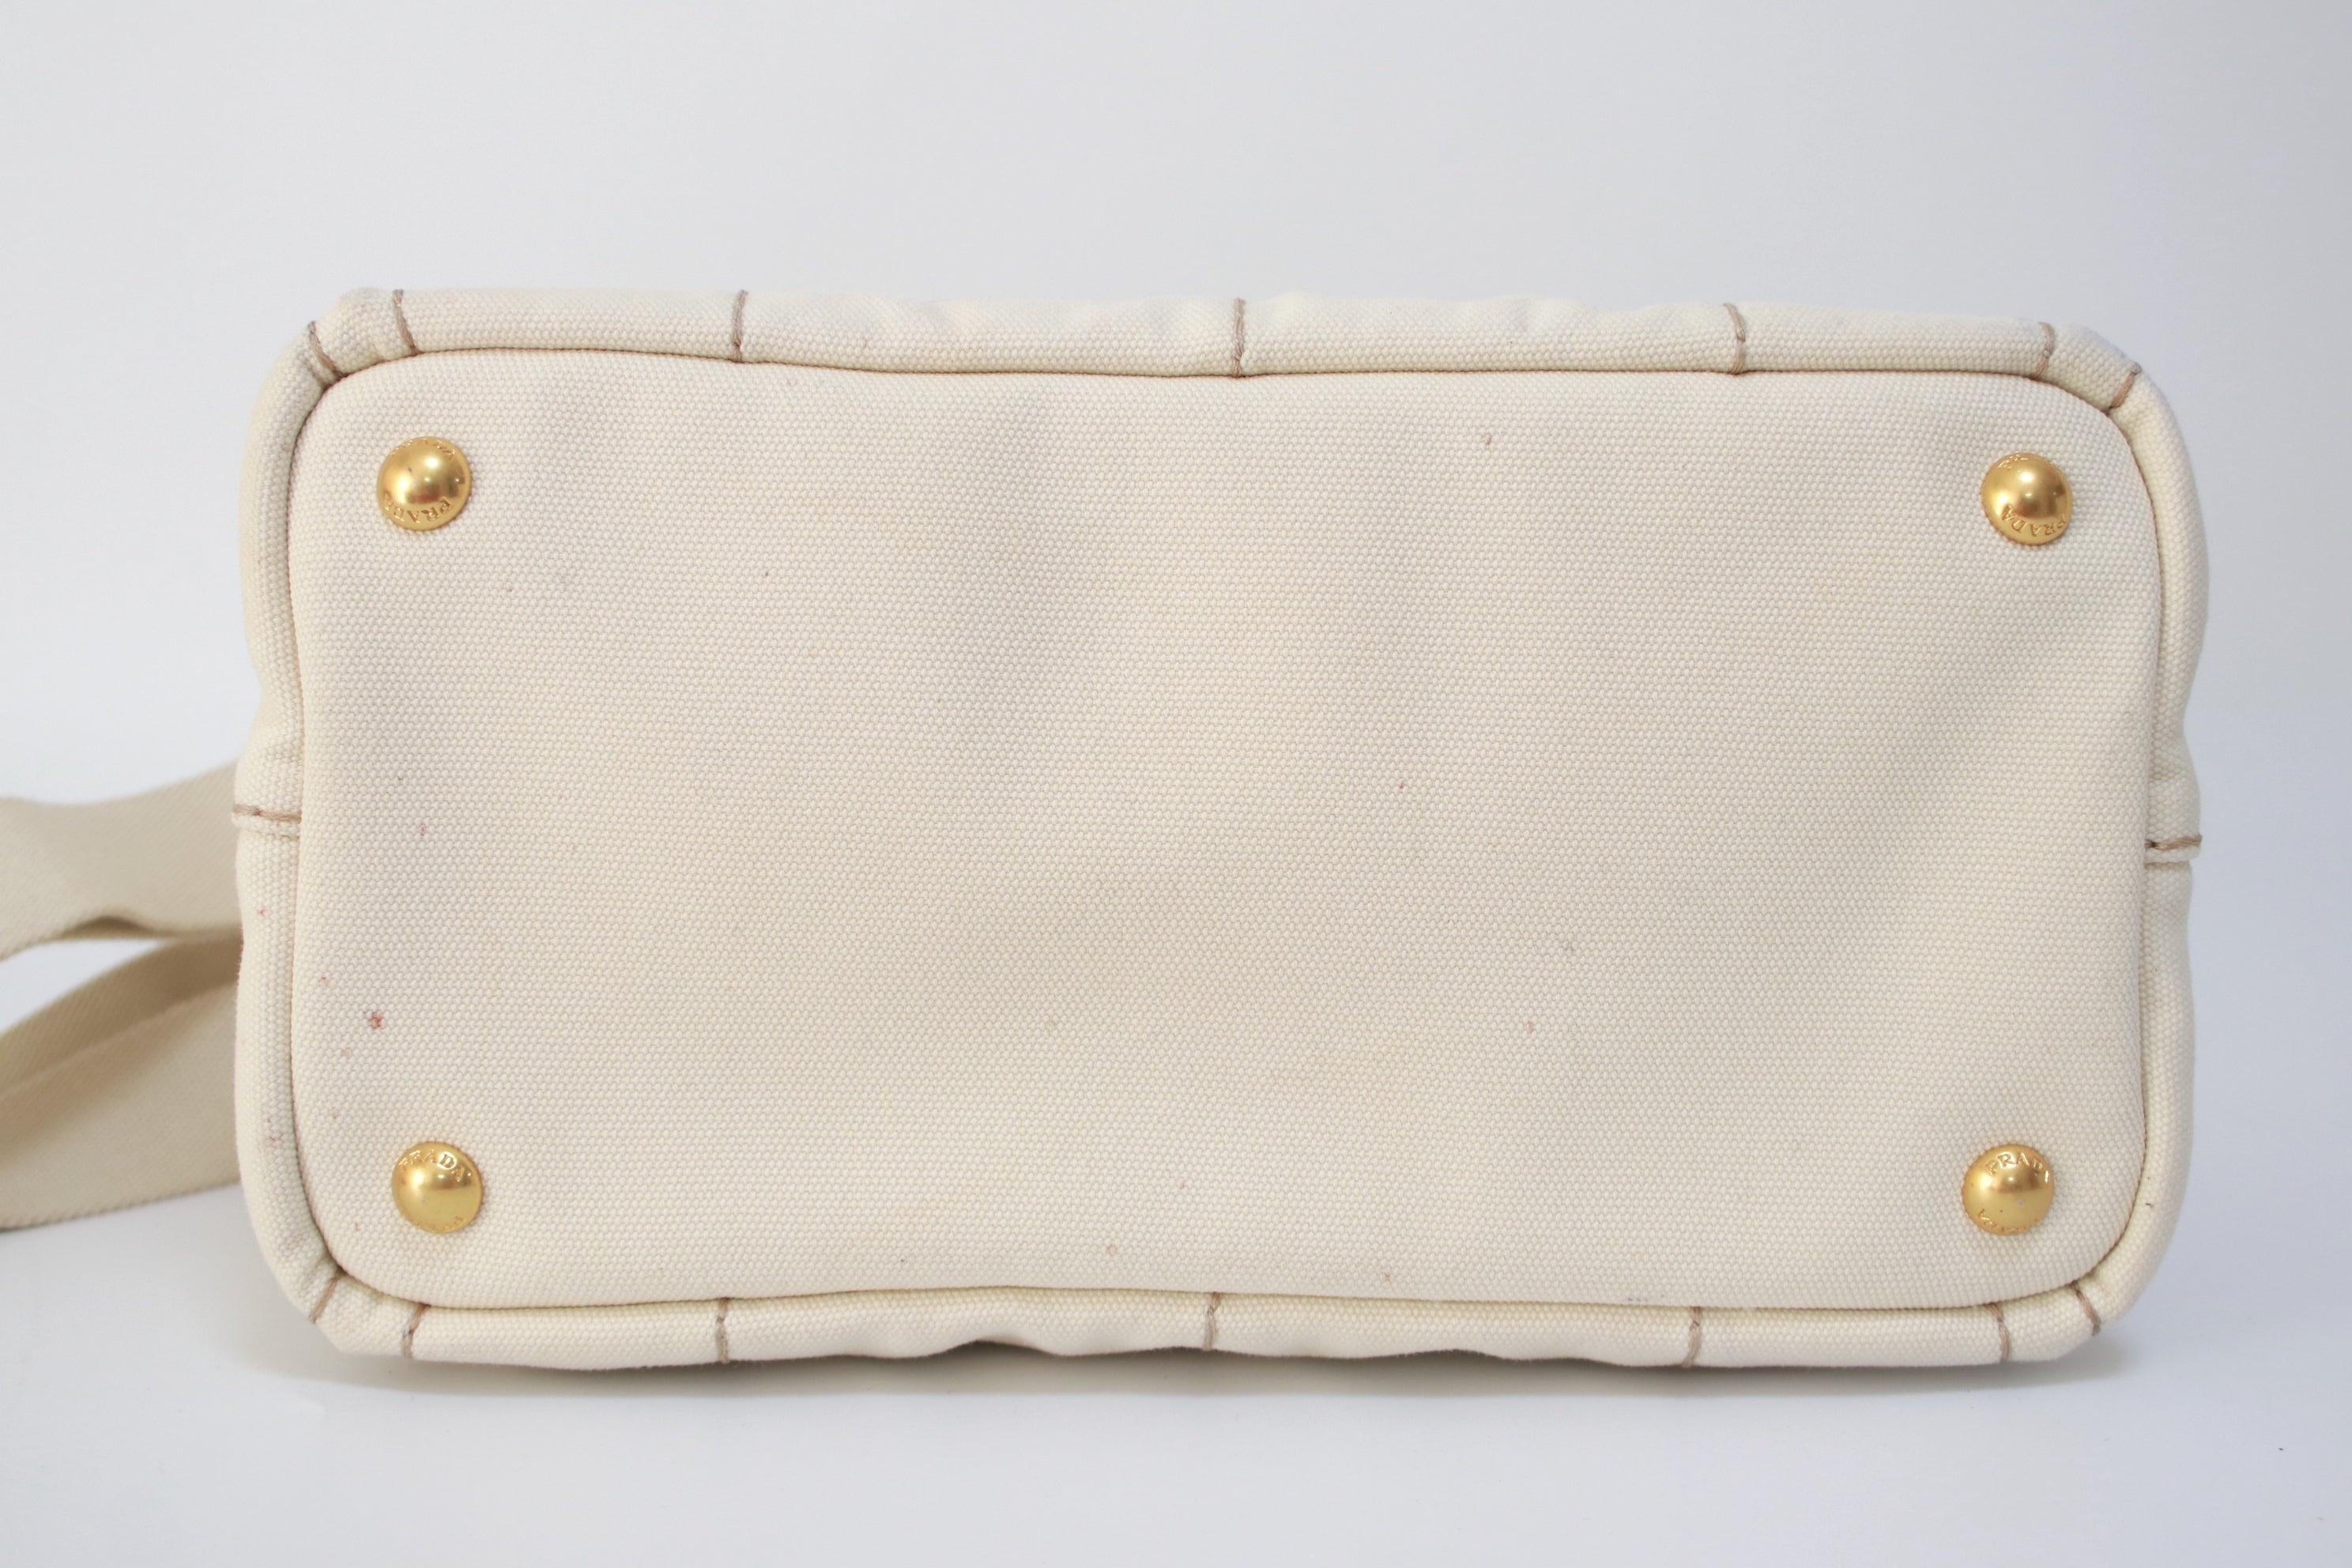 Prada Canapa Shoulder Bag White Used (7190)